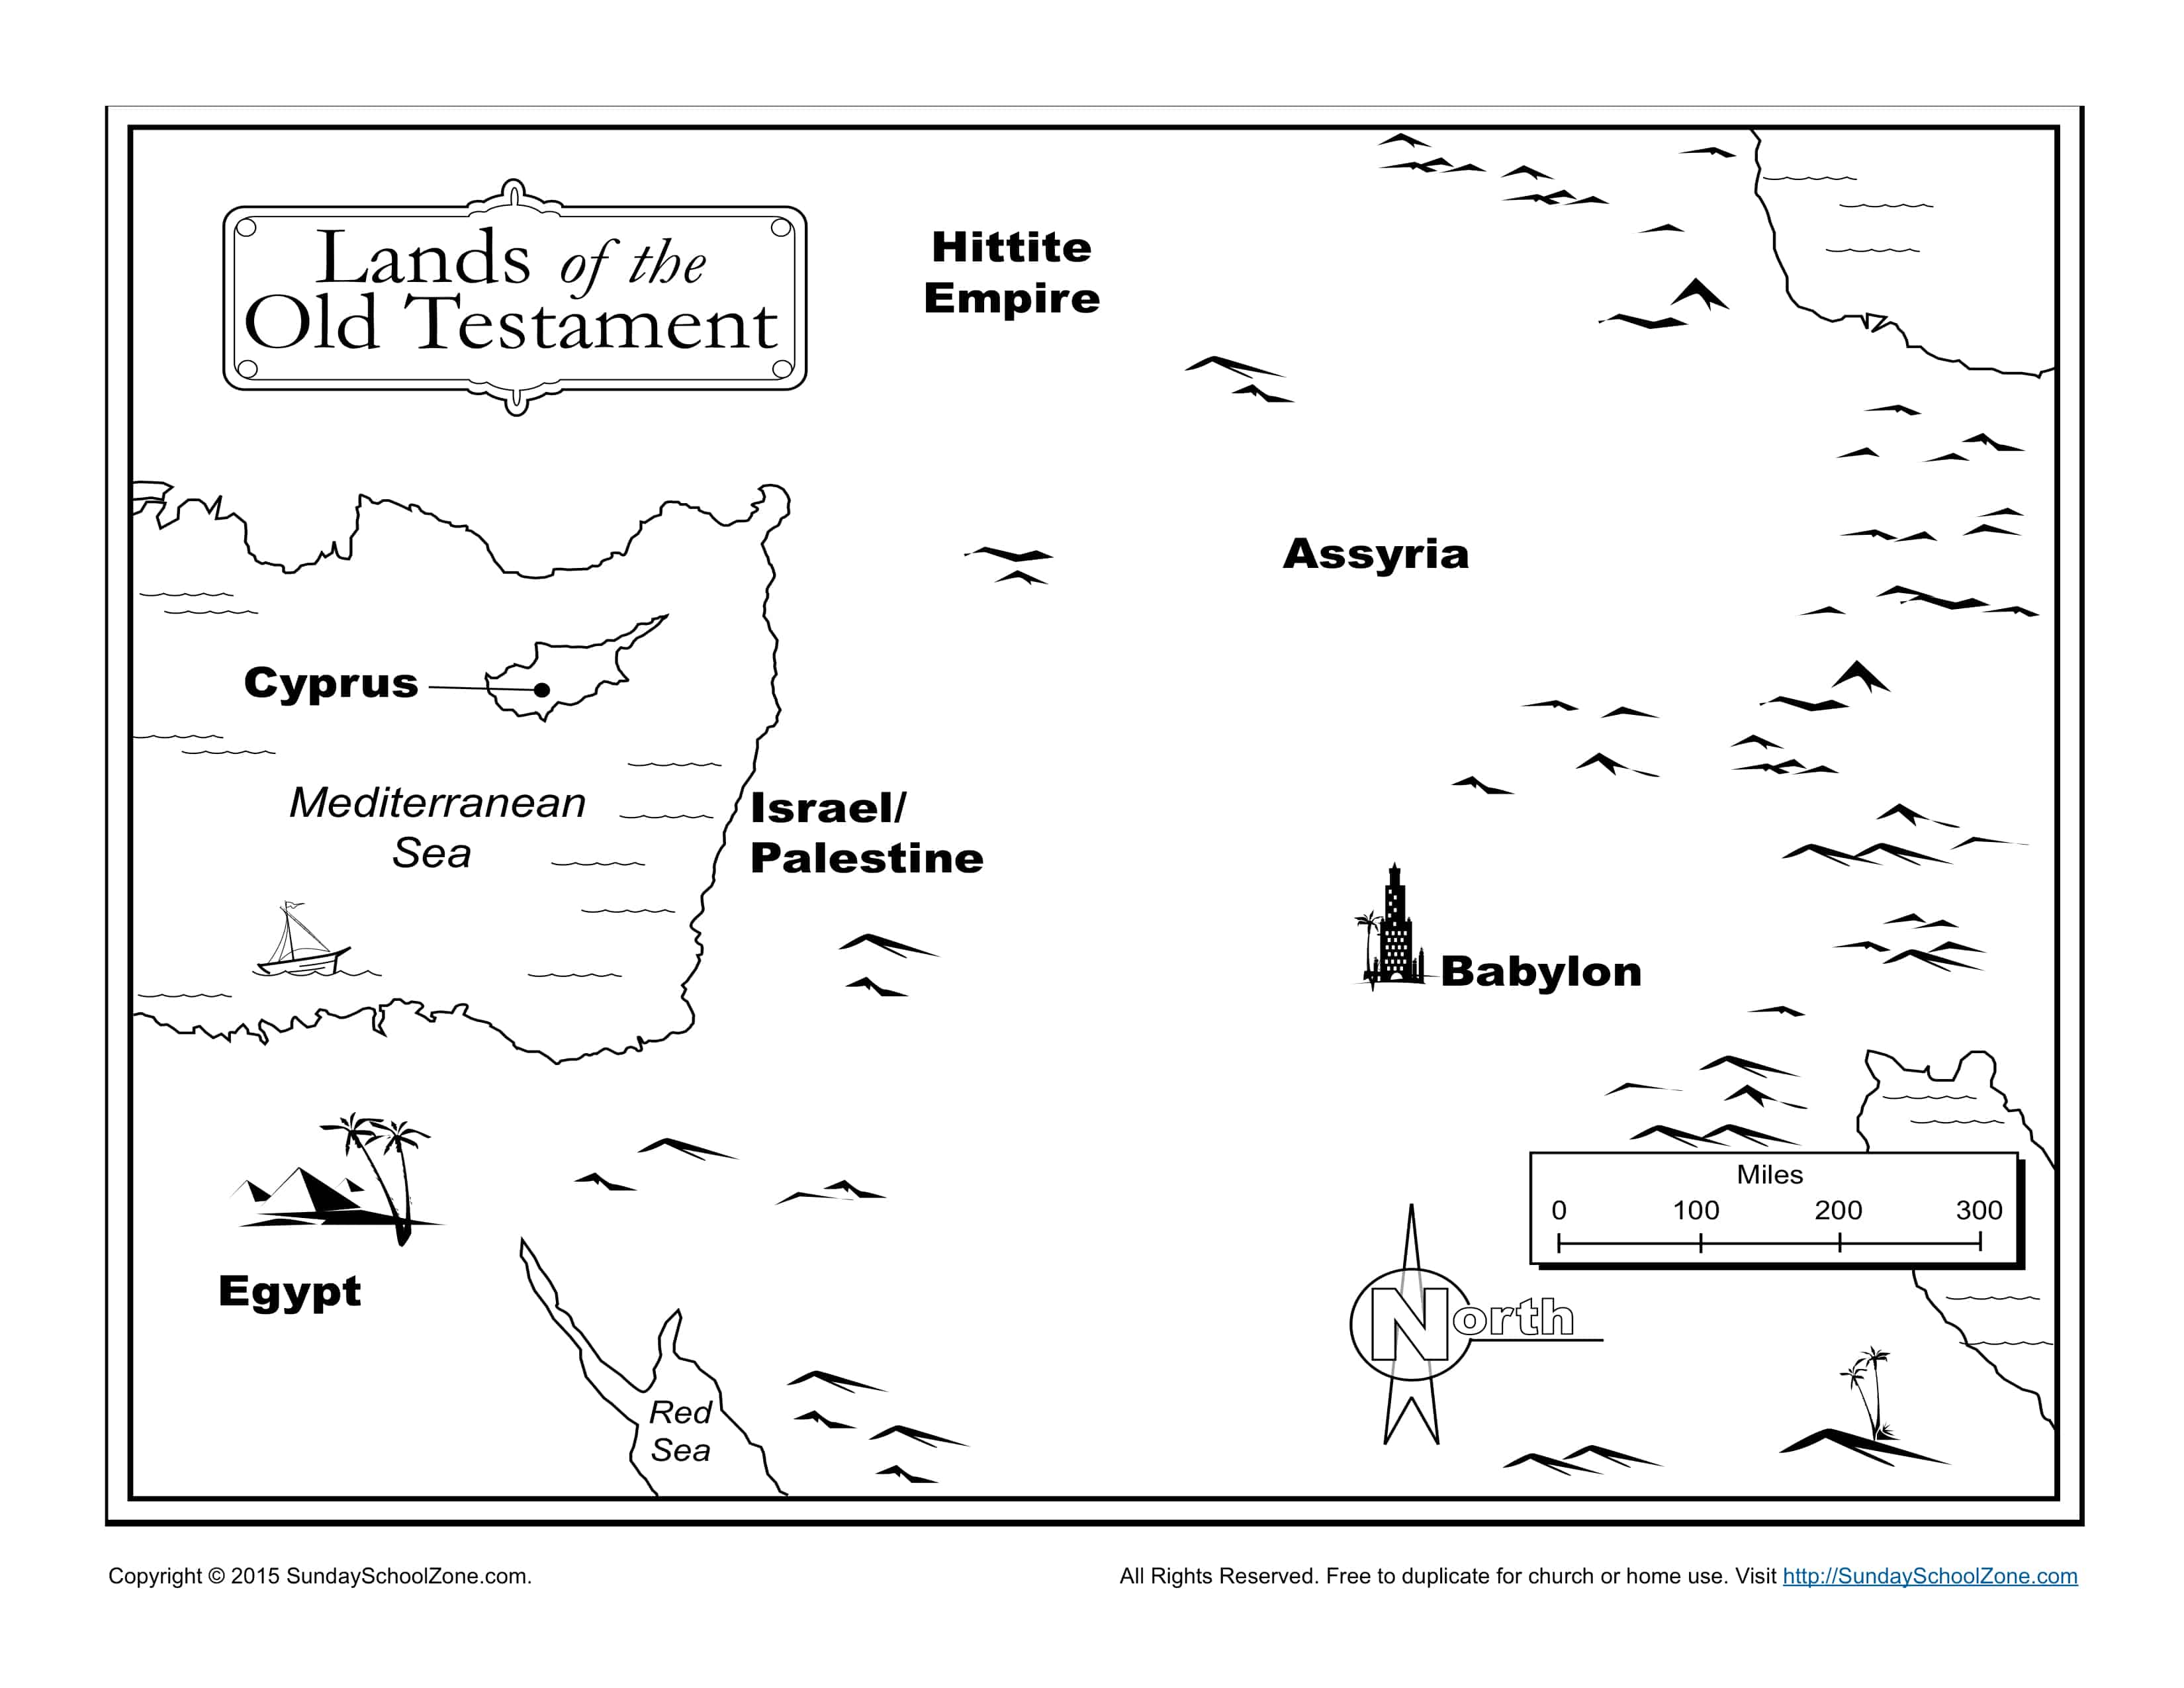 Lands of the Old Testament Bible Map - Children's Bible Activities